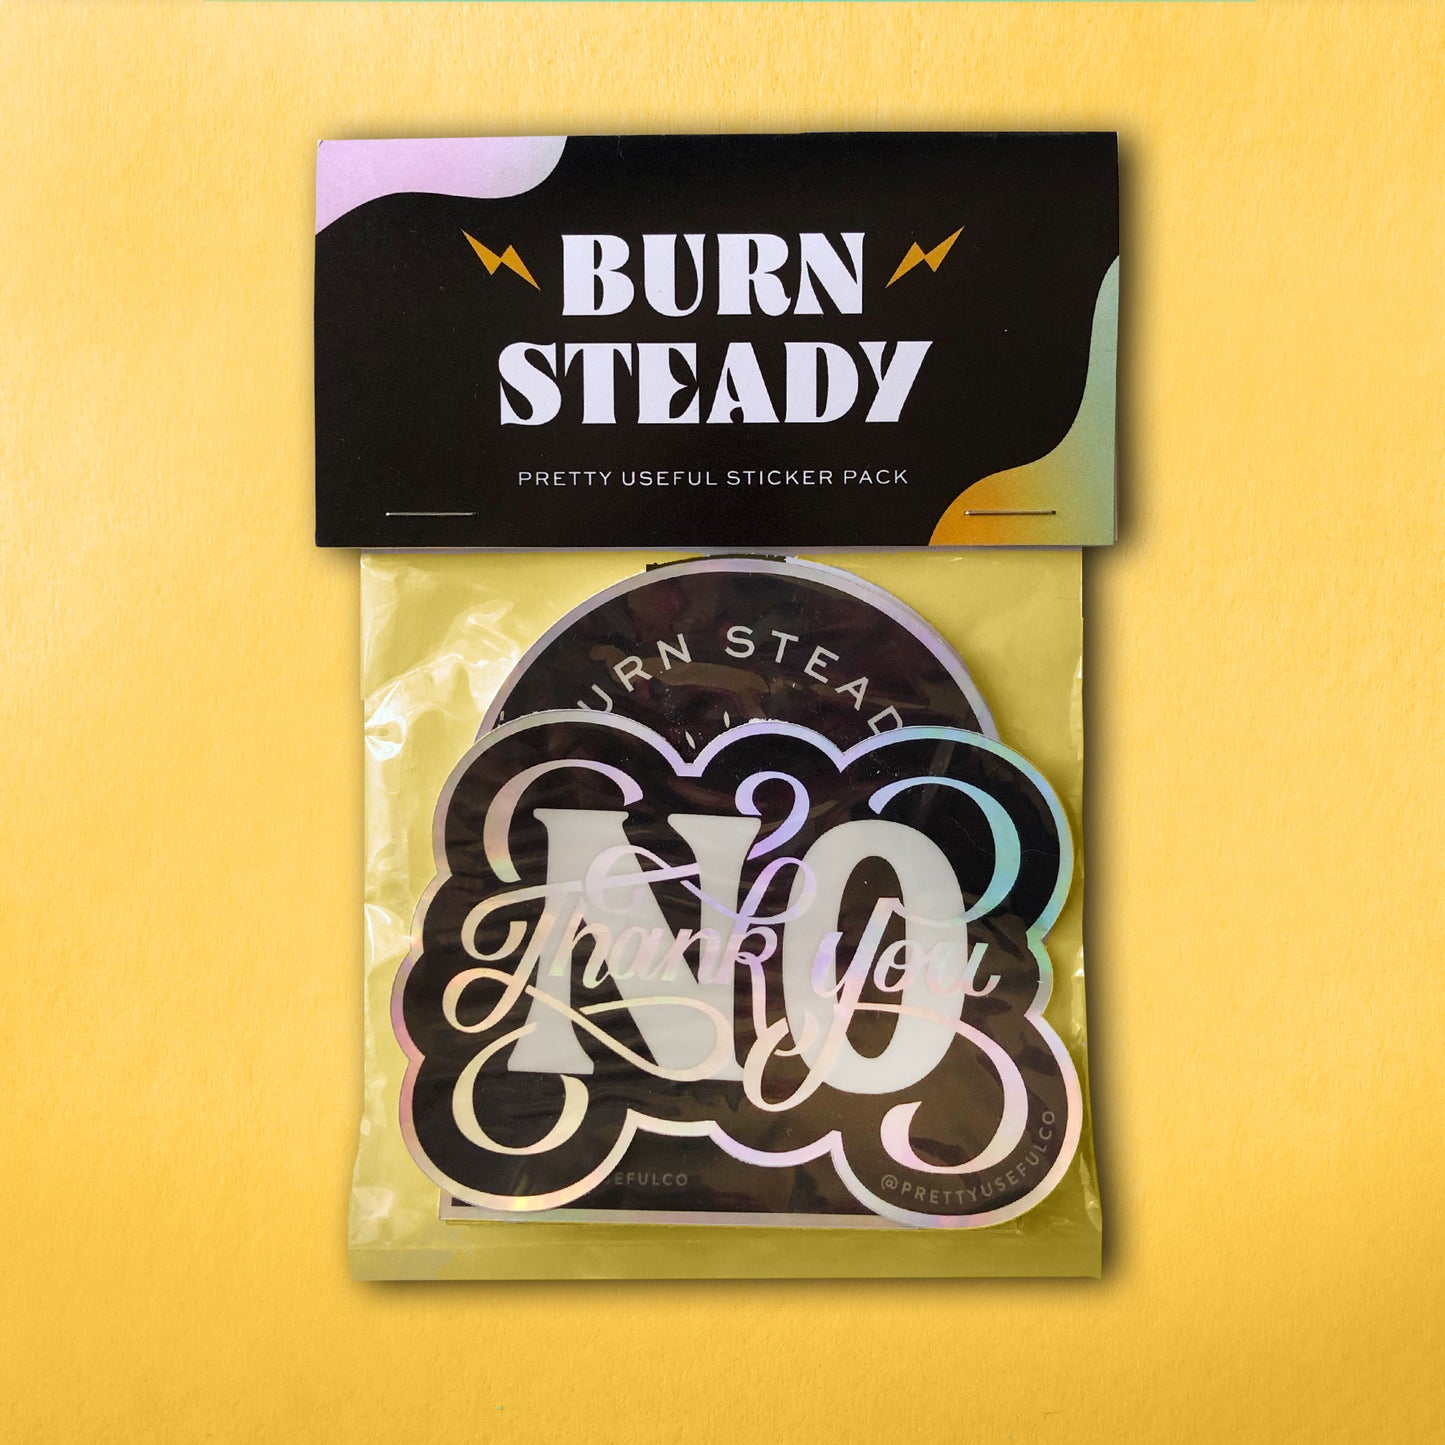 Burn Steady Sticker Pack